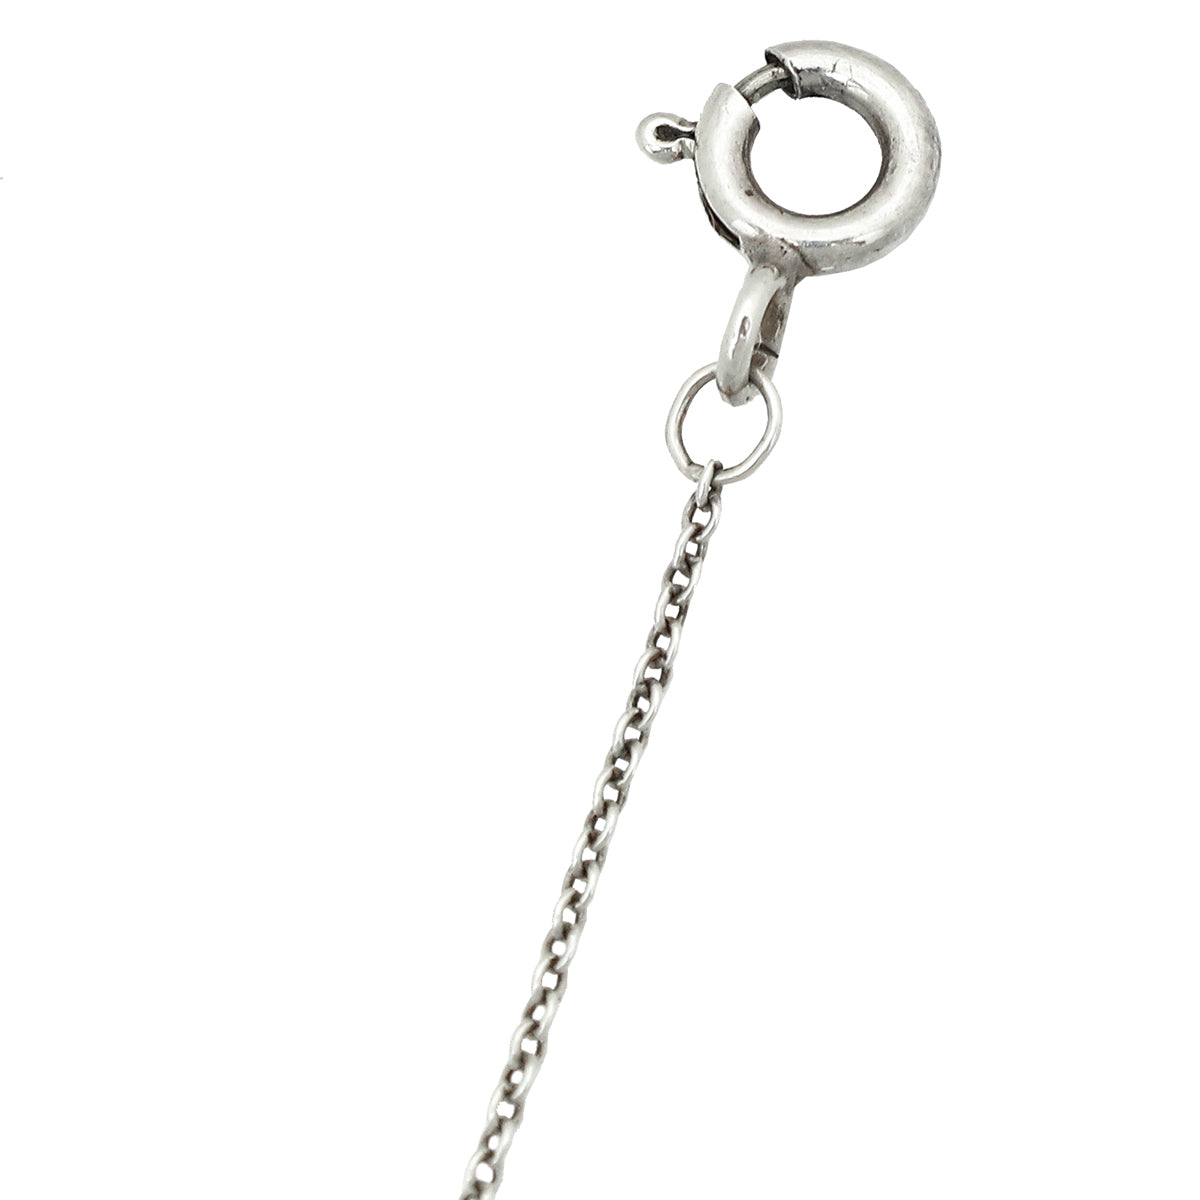 Tiffany & Co Blue Enamel Heart Key Pendant Necklace